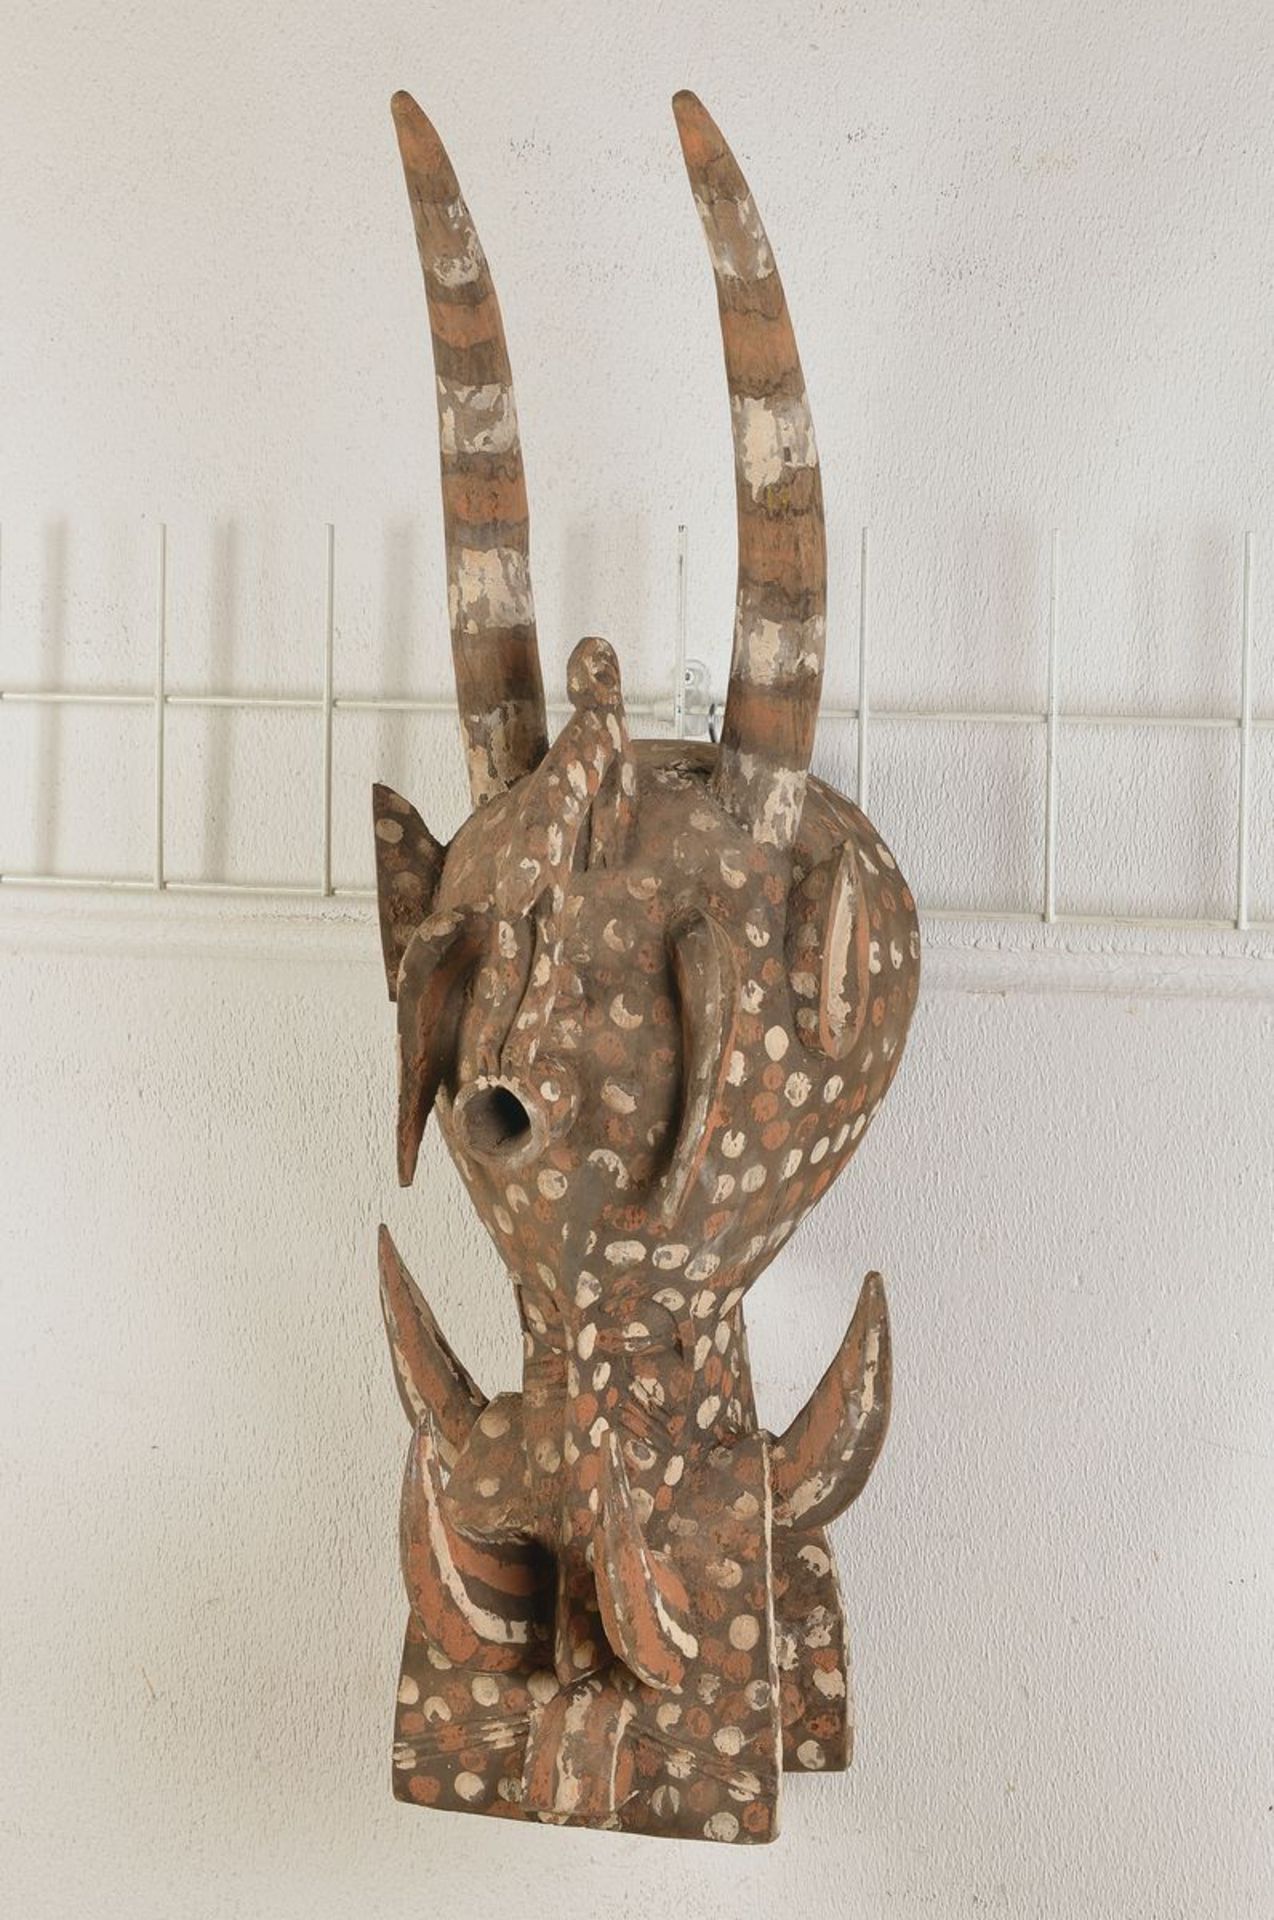 Helmmaske, Senufo, Burkina Faso, ca. 60-70 Jahre alt, Holz geschnitzt, zoomorphe Gestalt in